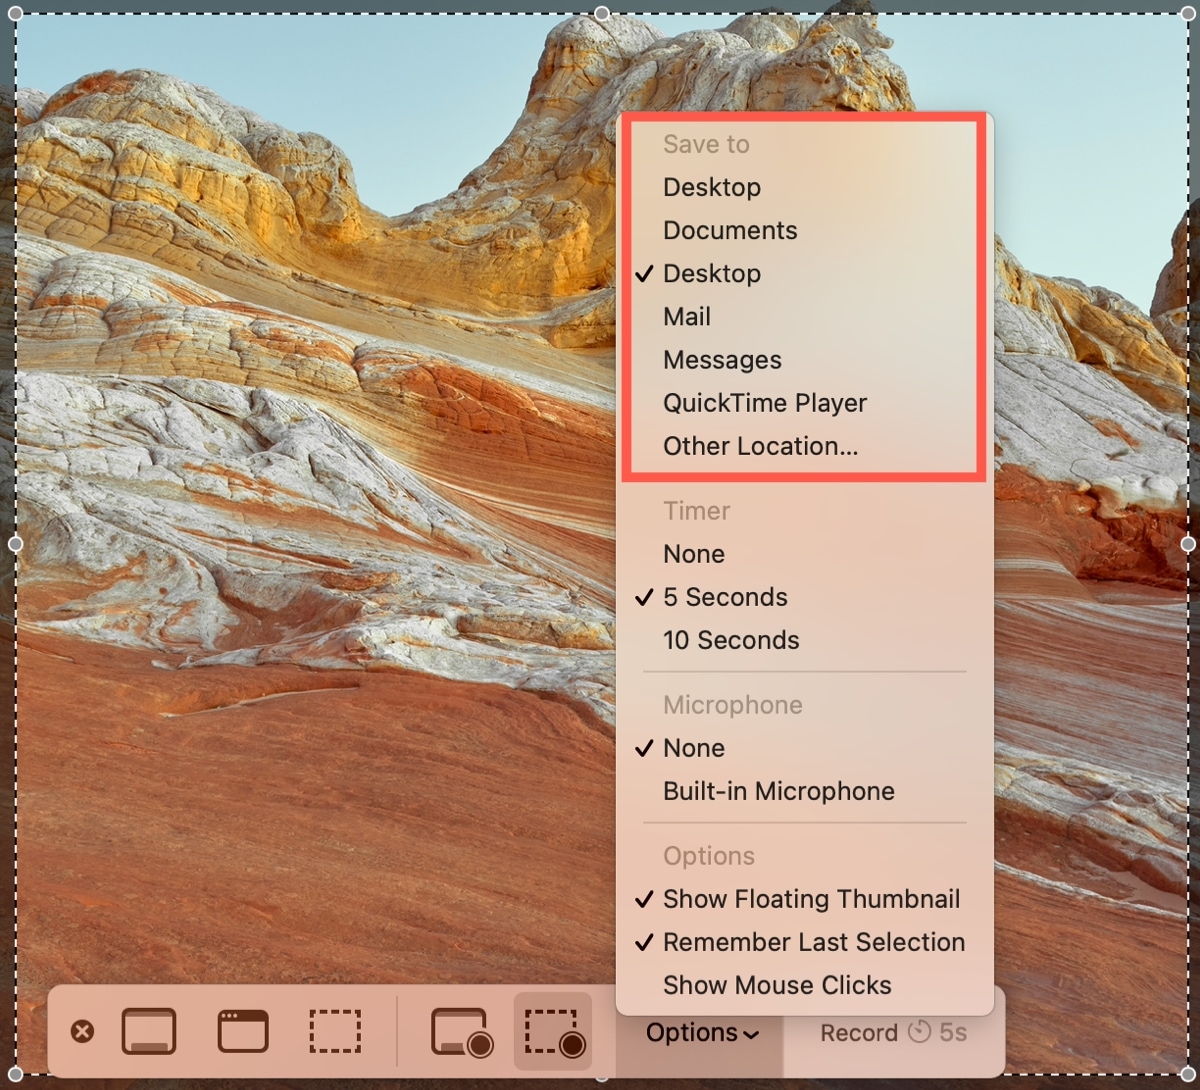 Save Screenshots Utility on Mac